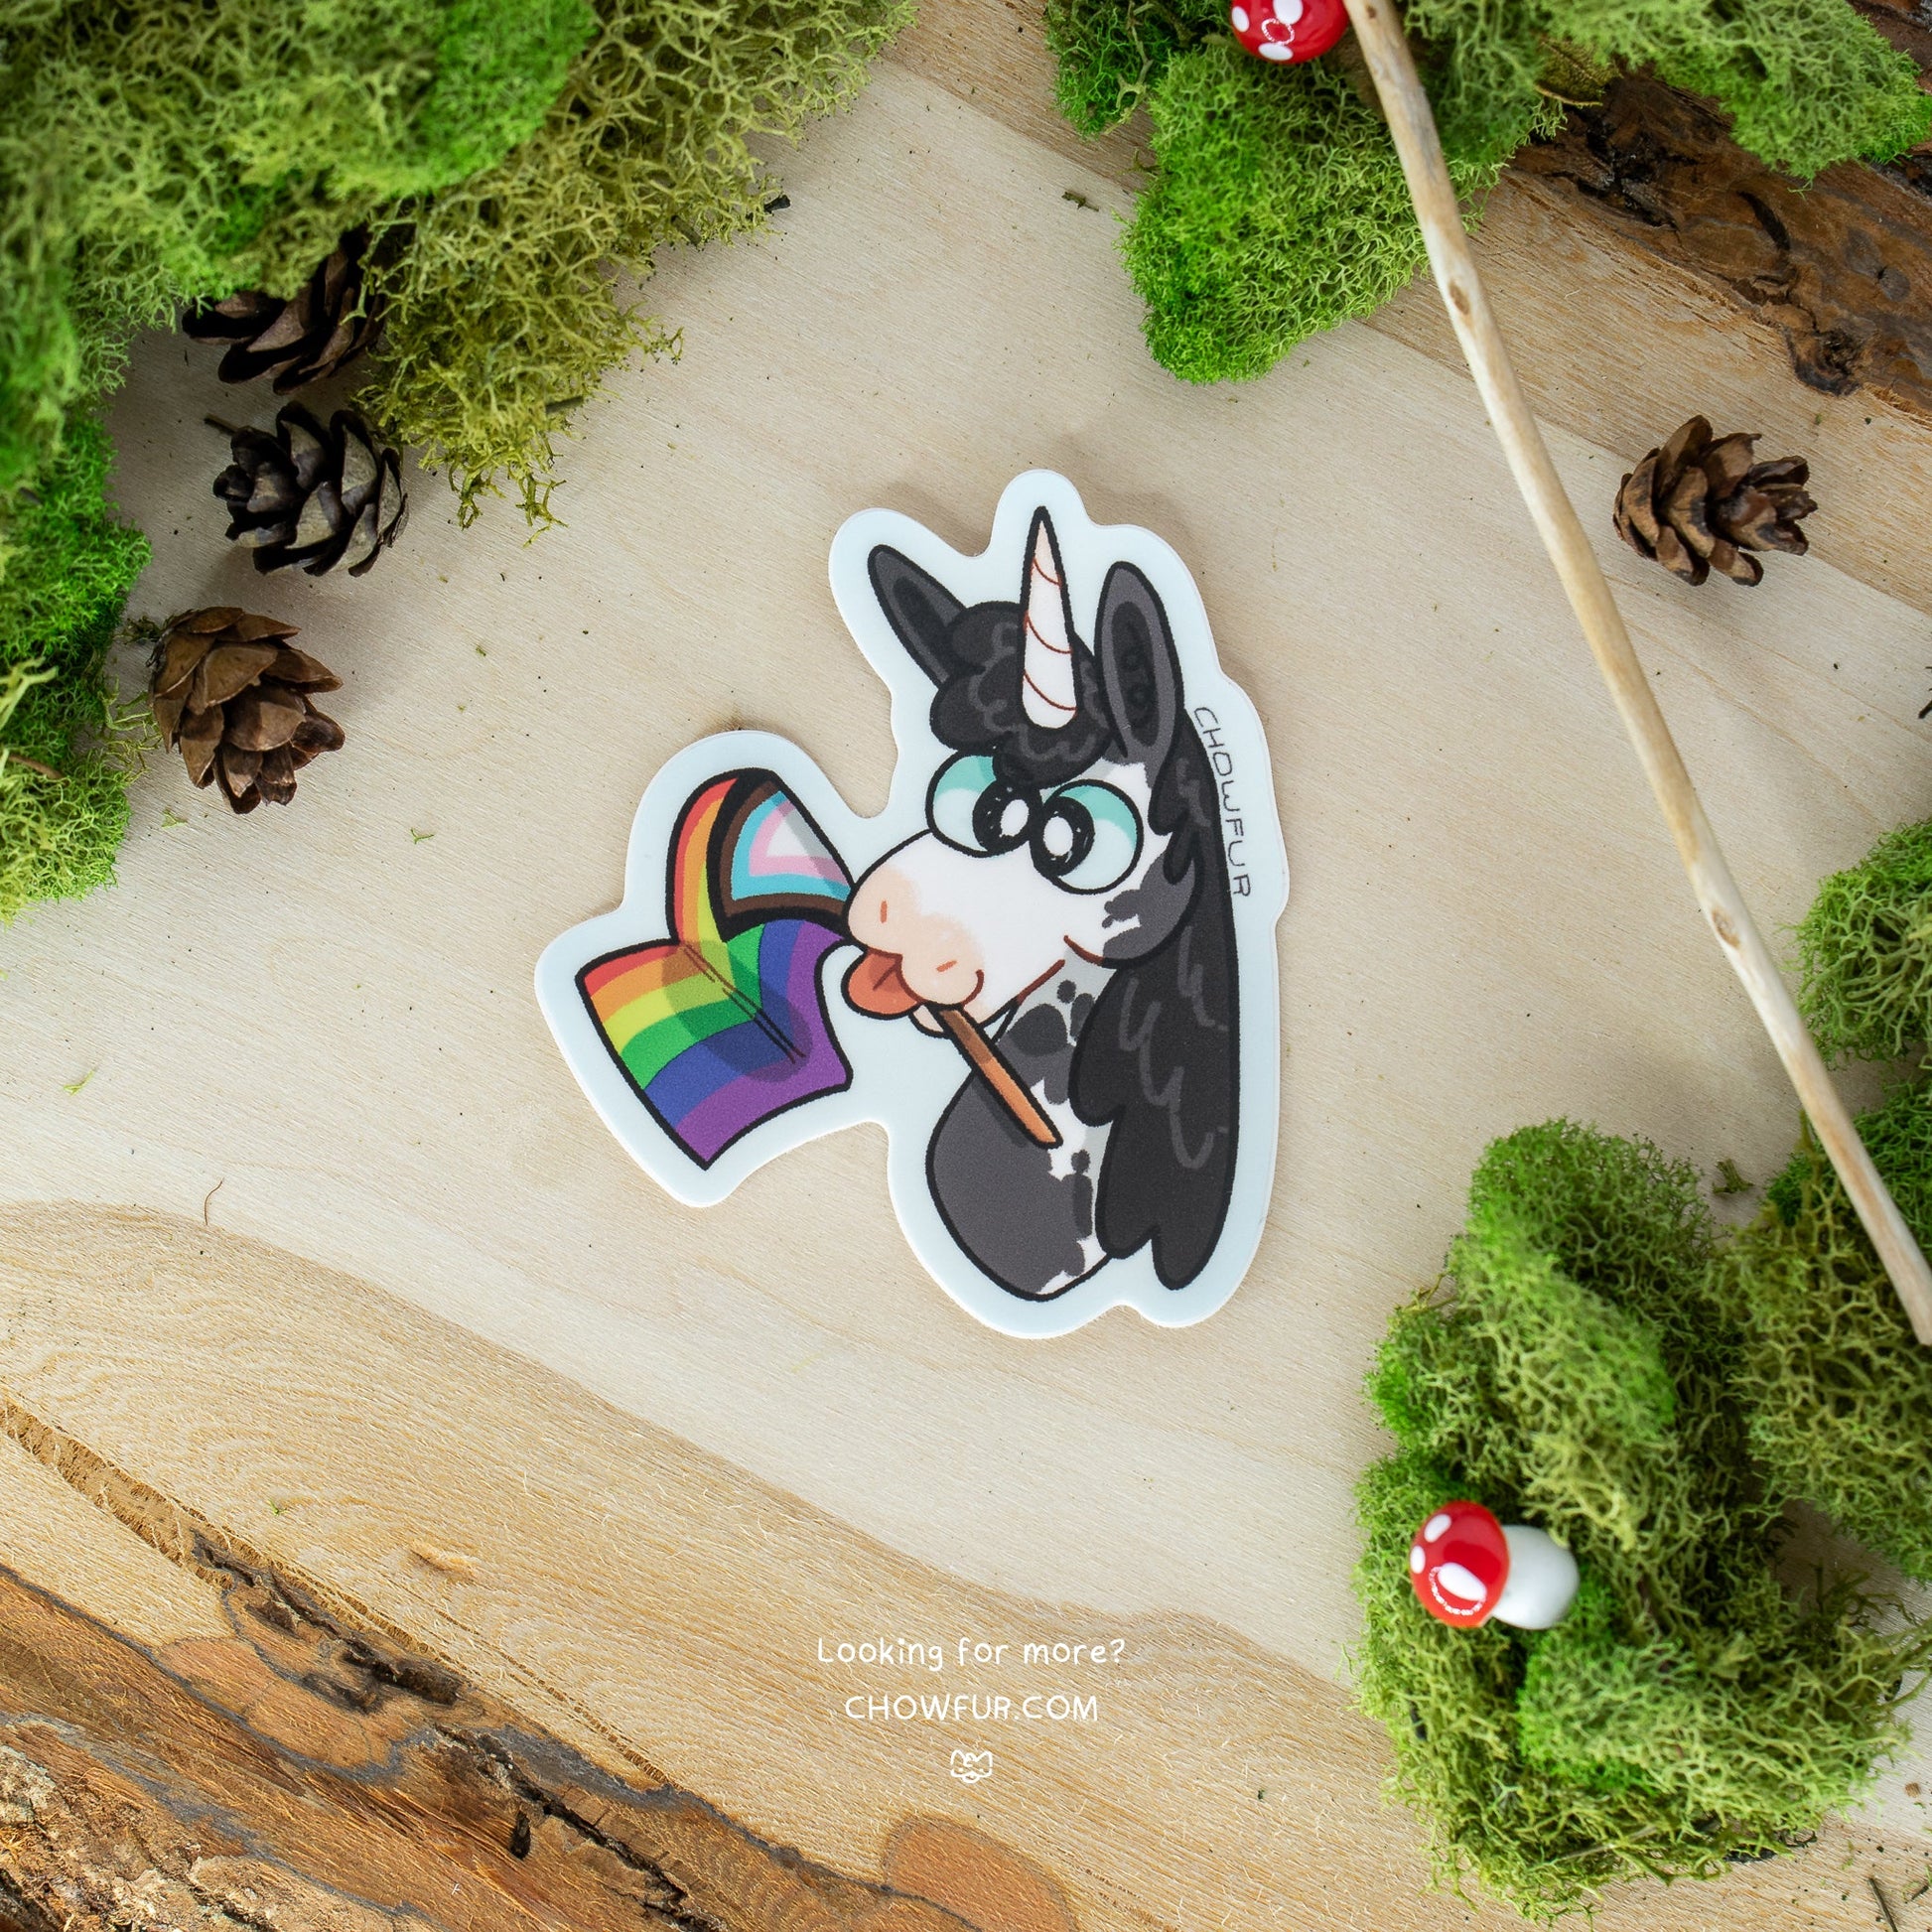 Unicorn LGBTQ+ Pride Sticker - $4 - Furry Sticker only from Chowfur.com -  Shop now!